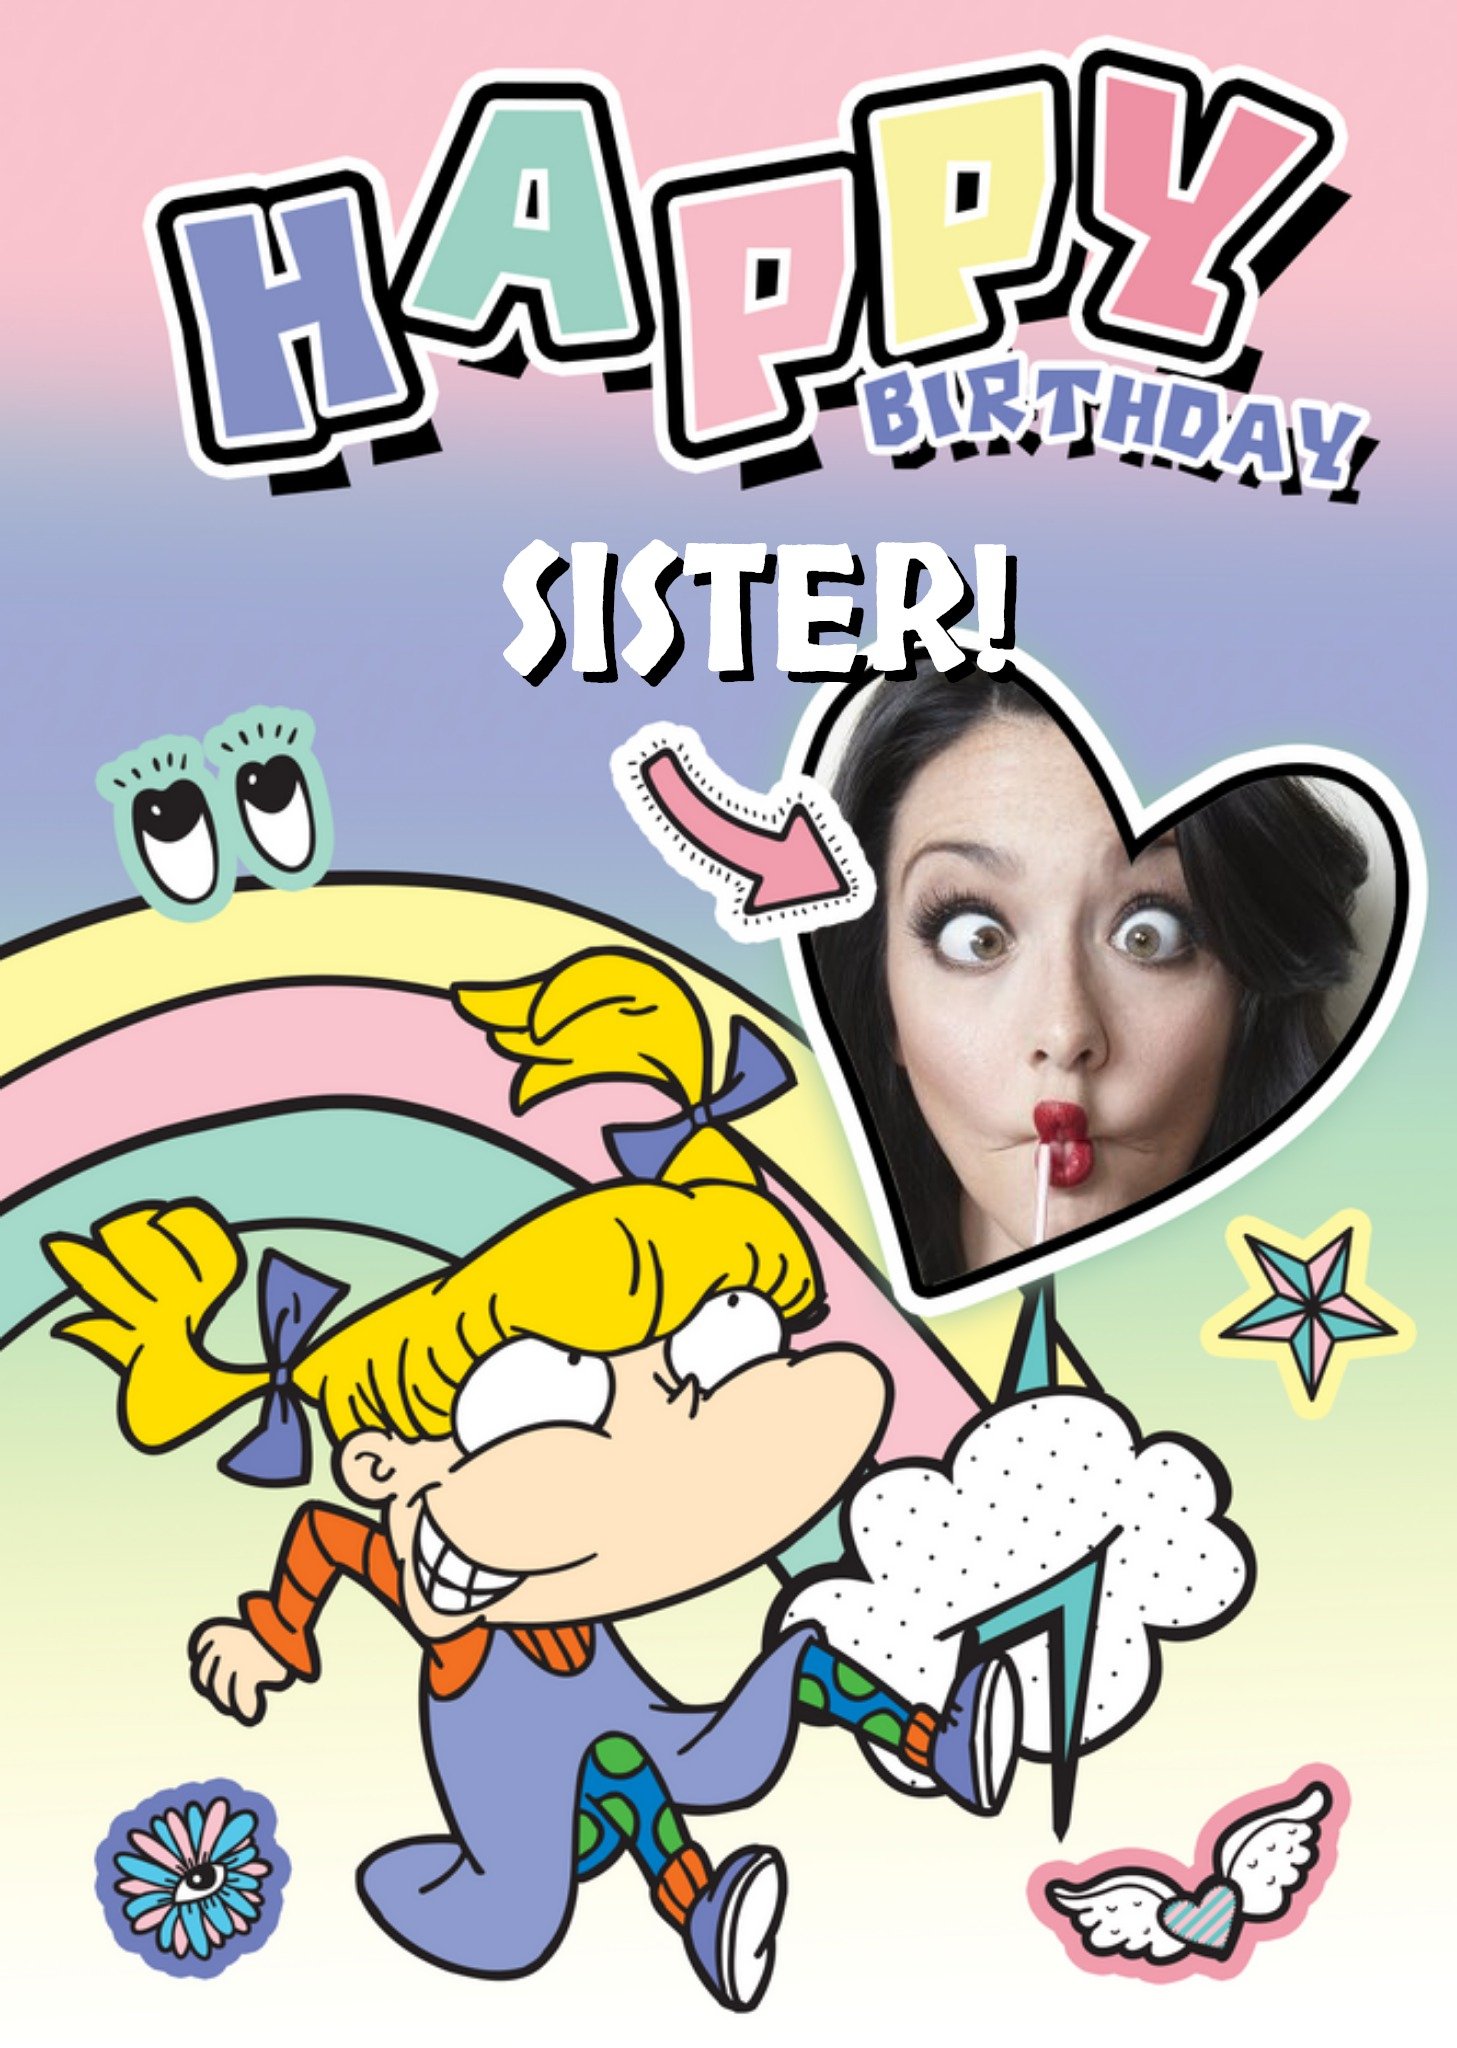 Nickelodeon Rugrats Angelica Photo Upload Sister Birthday Card Ecard